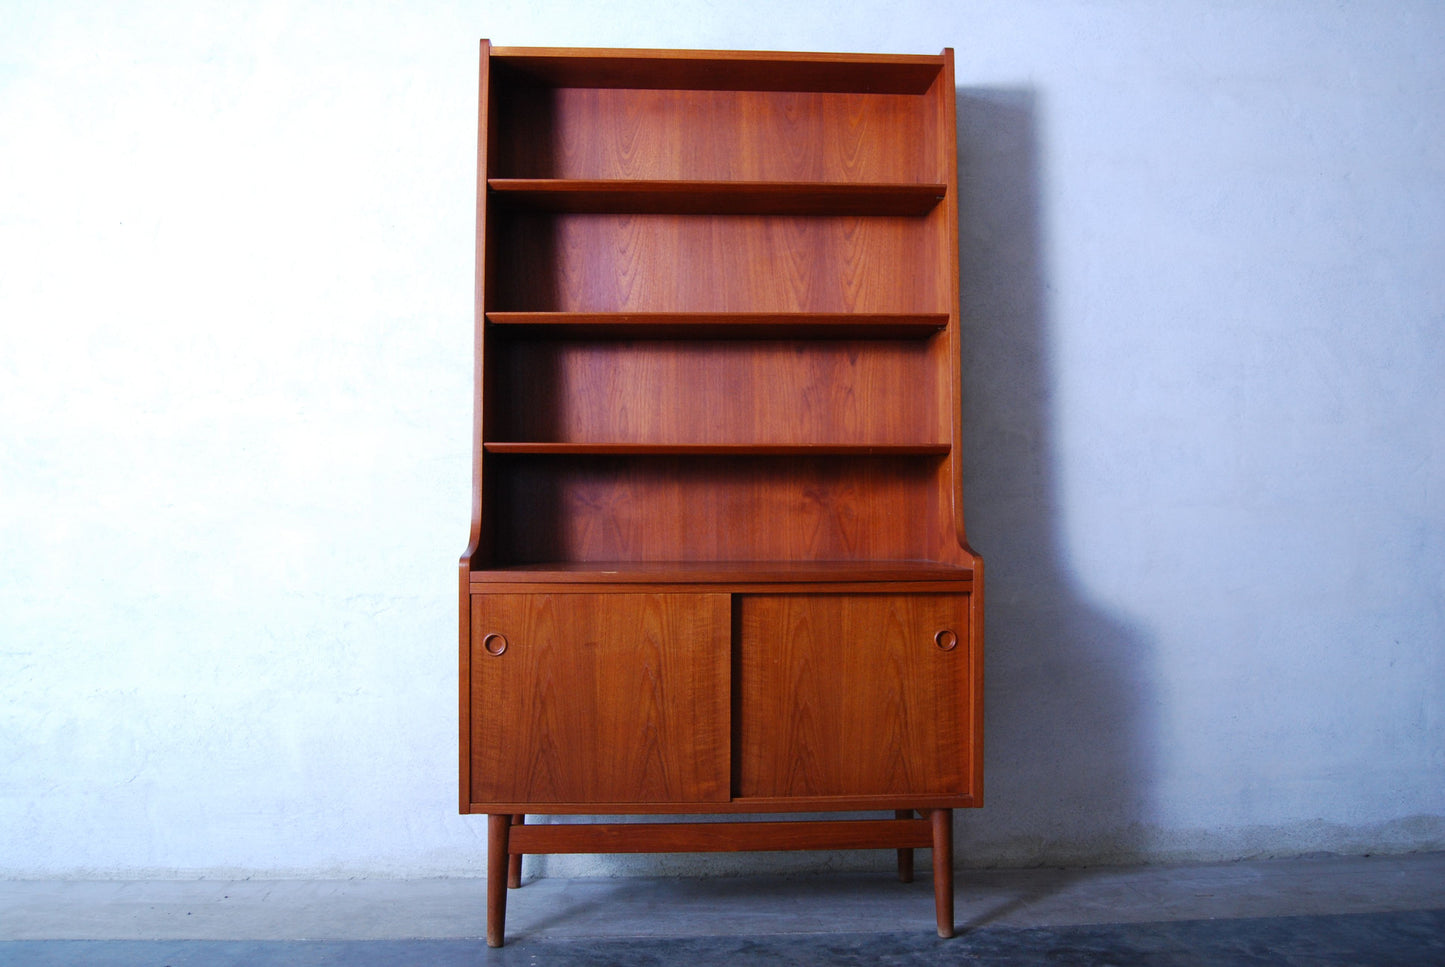 Bookshelf/storage unit